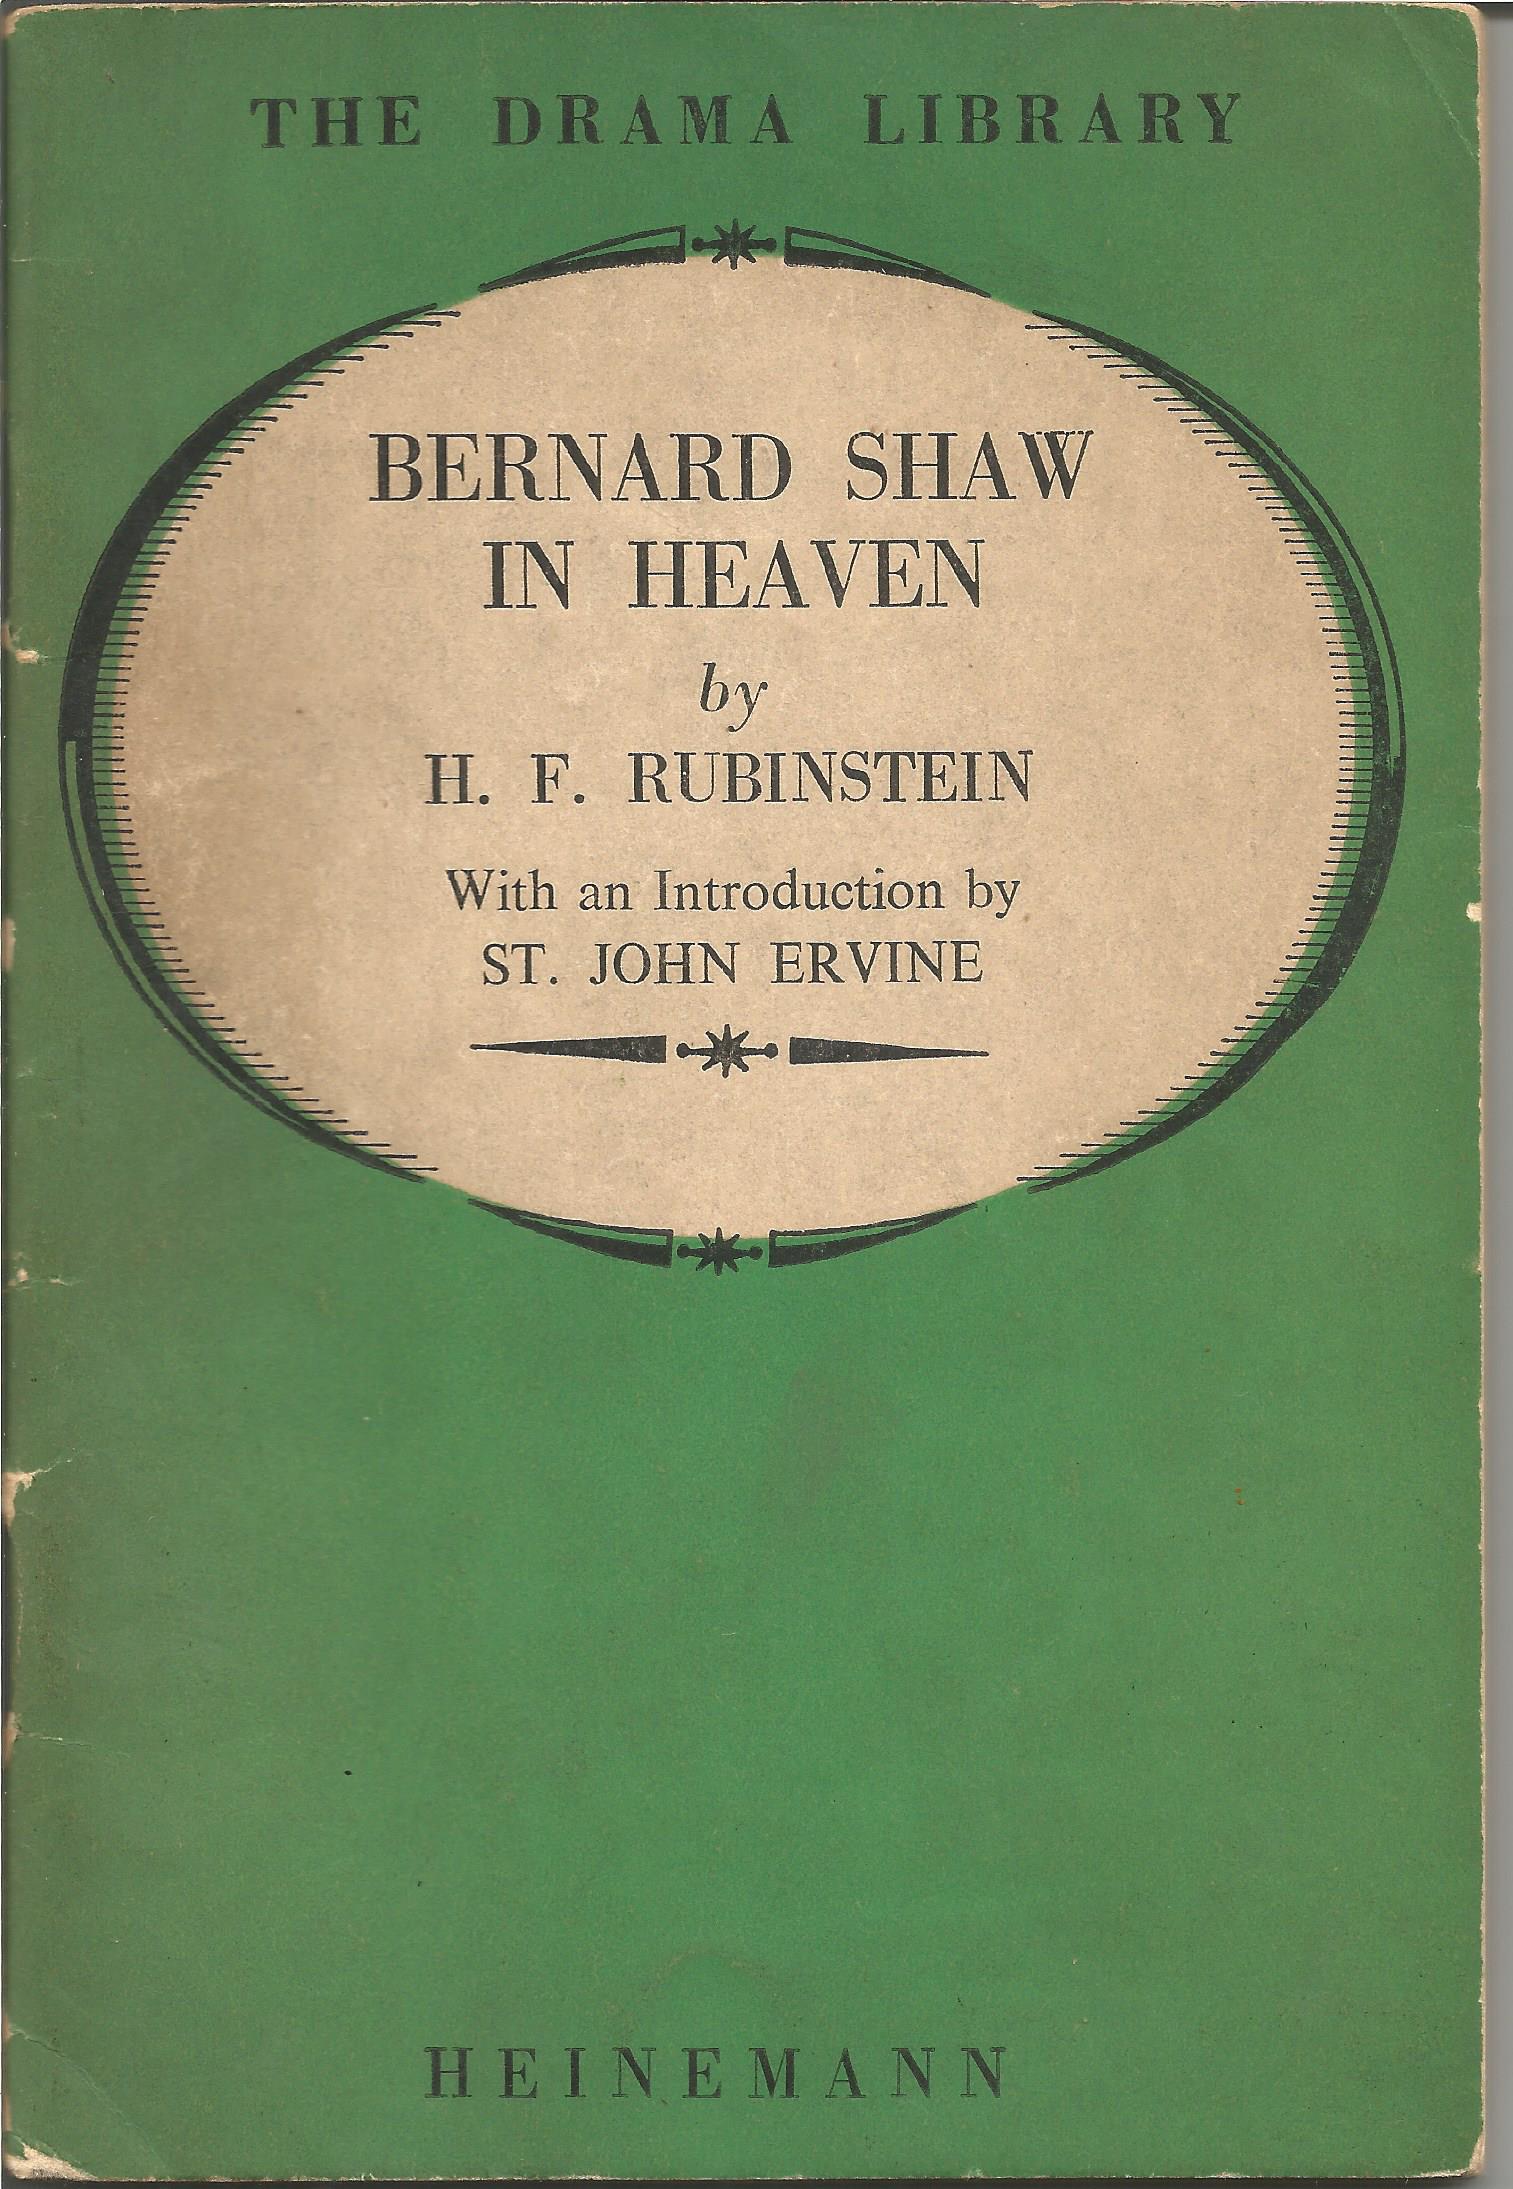 Bernard Shaw in Heaven H. F. Rubinstein publ. 1954 Heinemann 34 pp. wrappers, v. g. insr by HFR. - Image 2 of 2